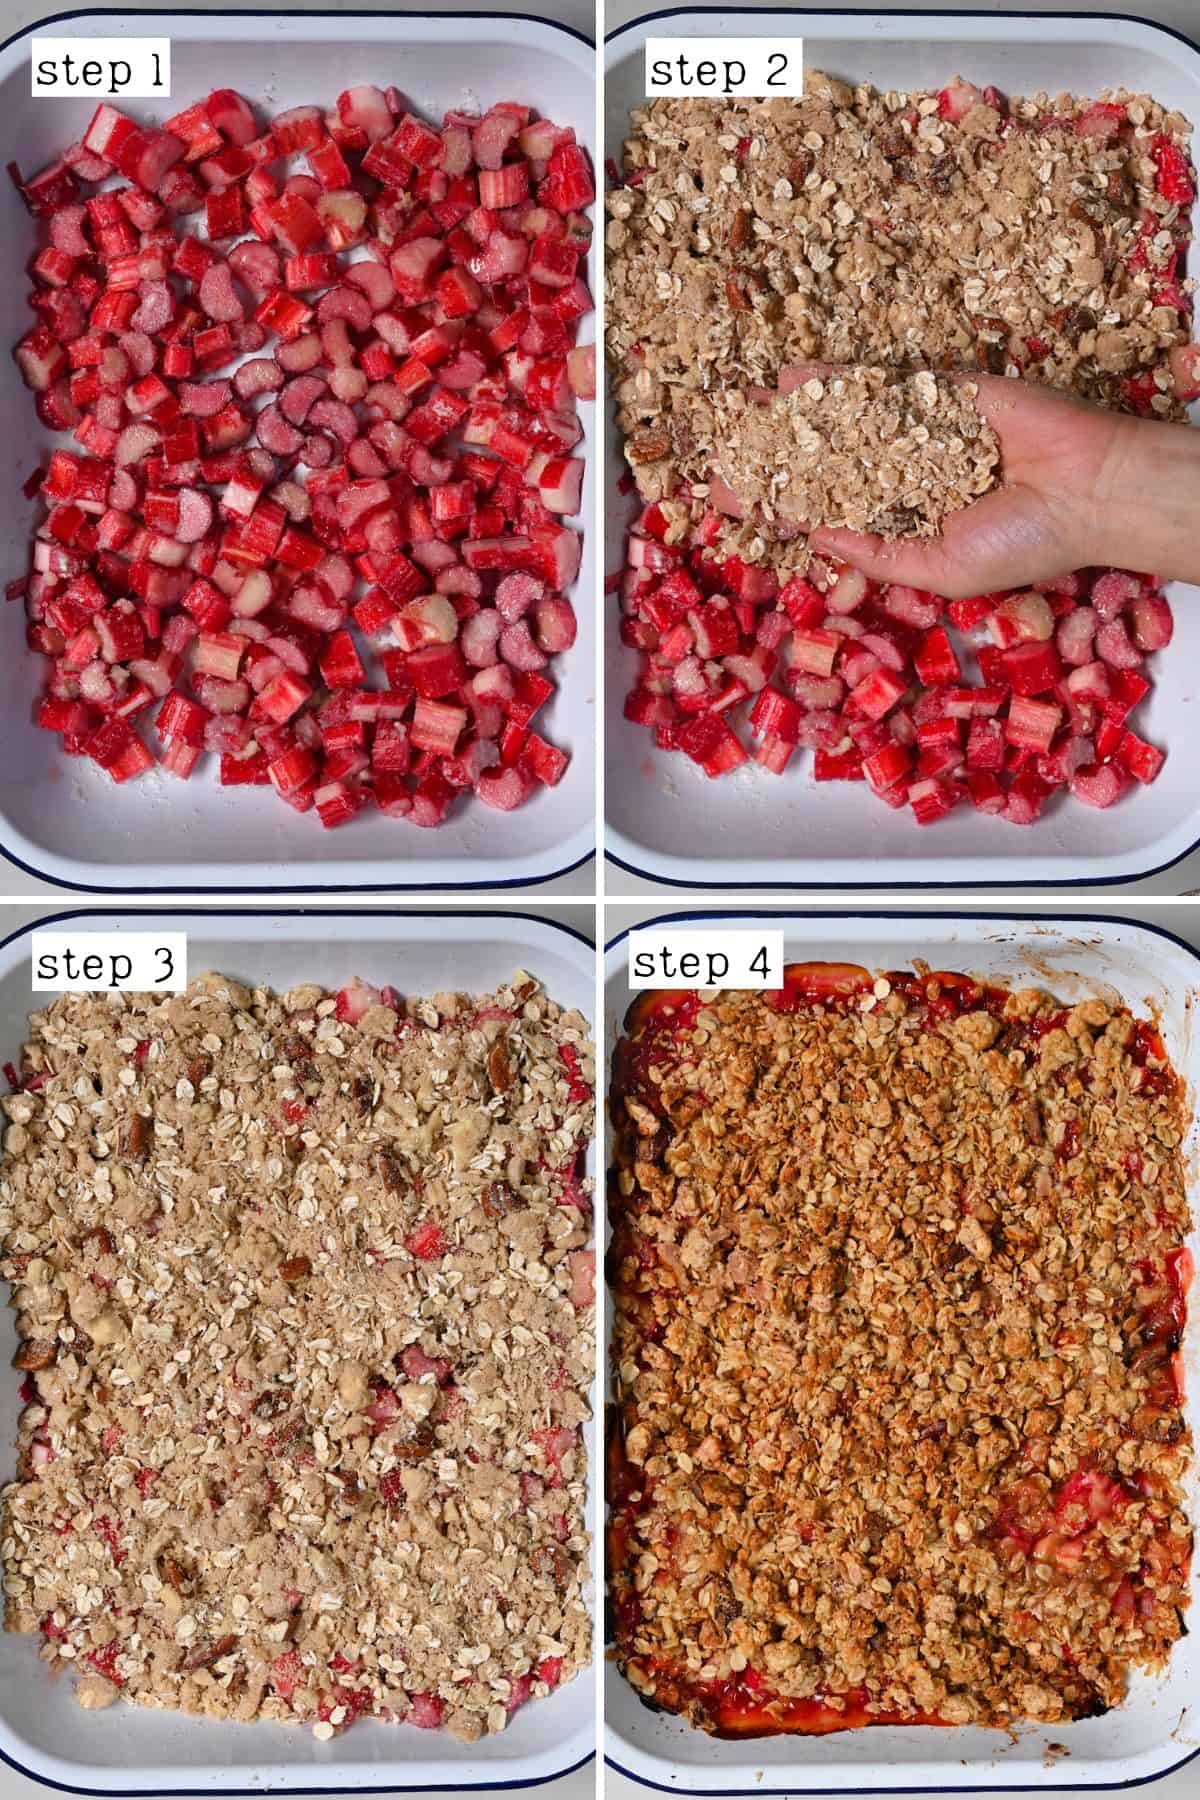 Steps for making rhubarb crisp